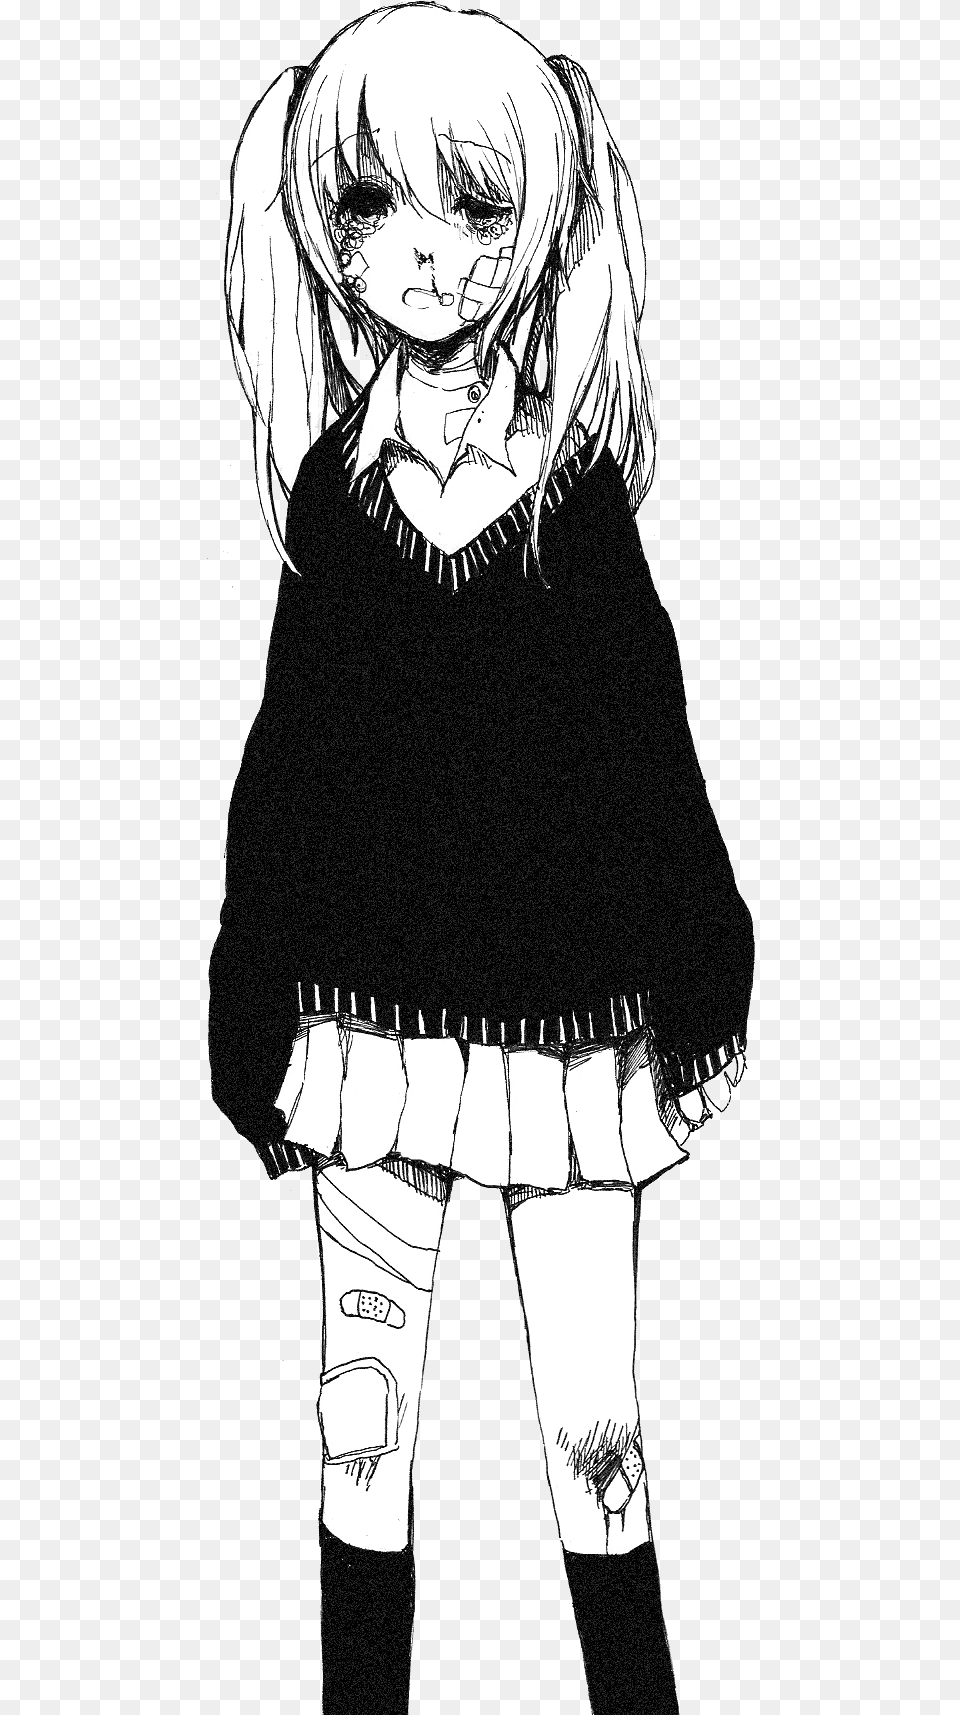 Transparent Anime Girl Anime Girl Depressed Transparent, Book, Comics, Publication, Manga Png Image